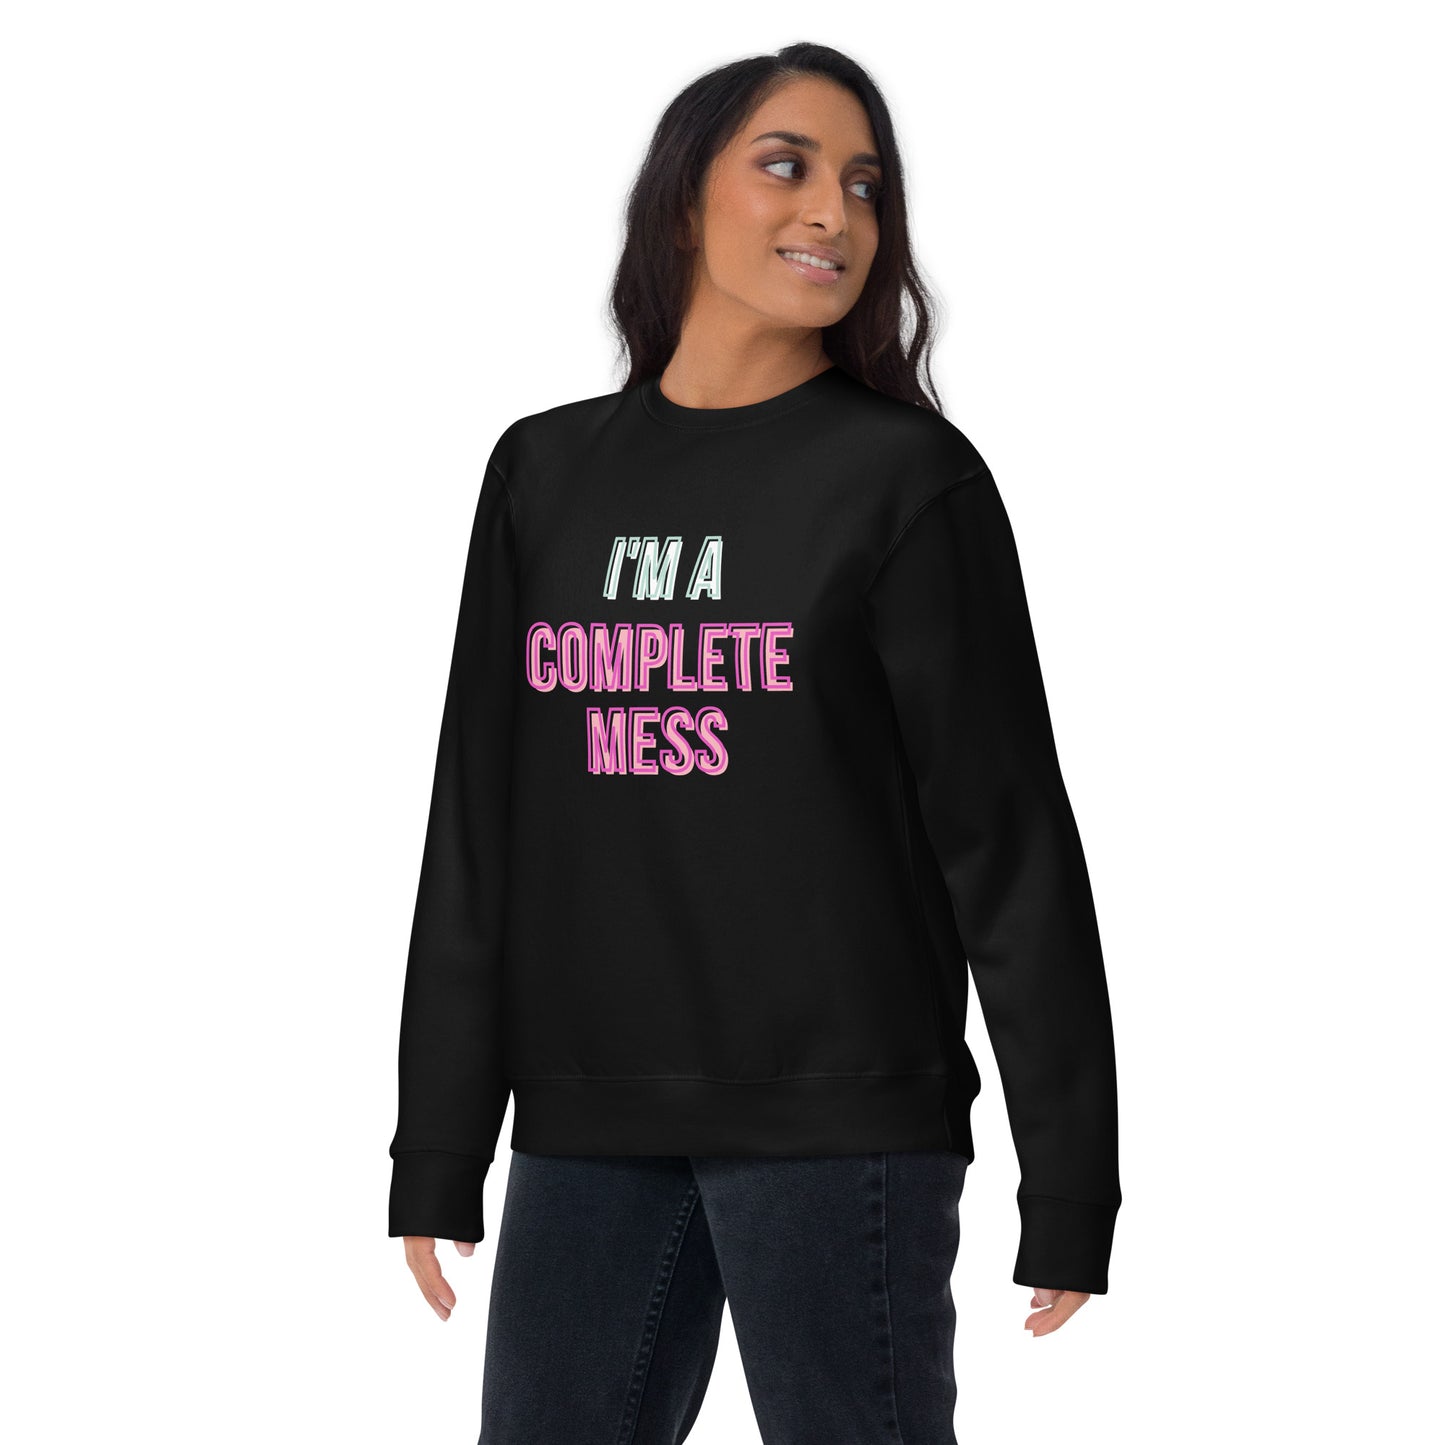 I'm a Complete Mess Sweatshirt